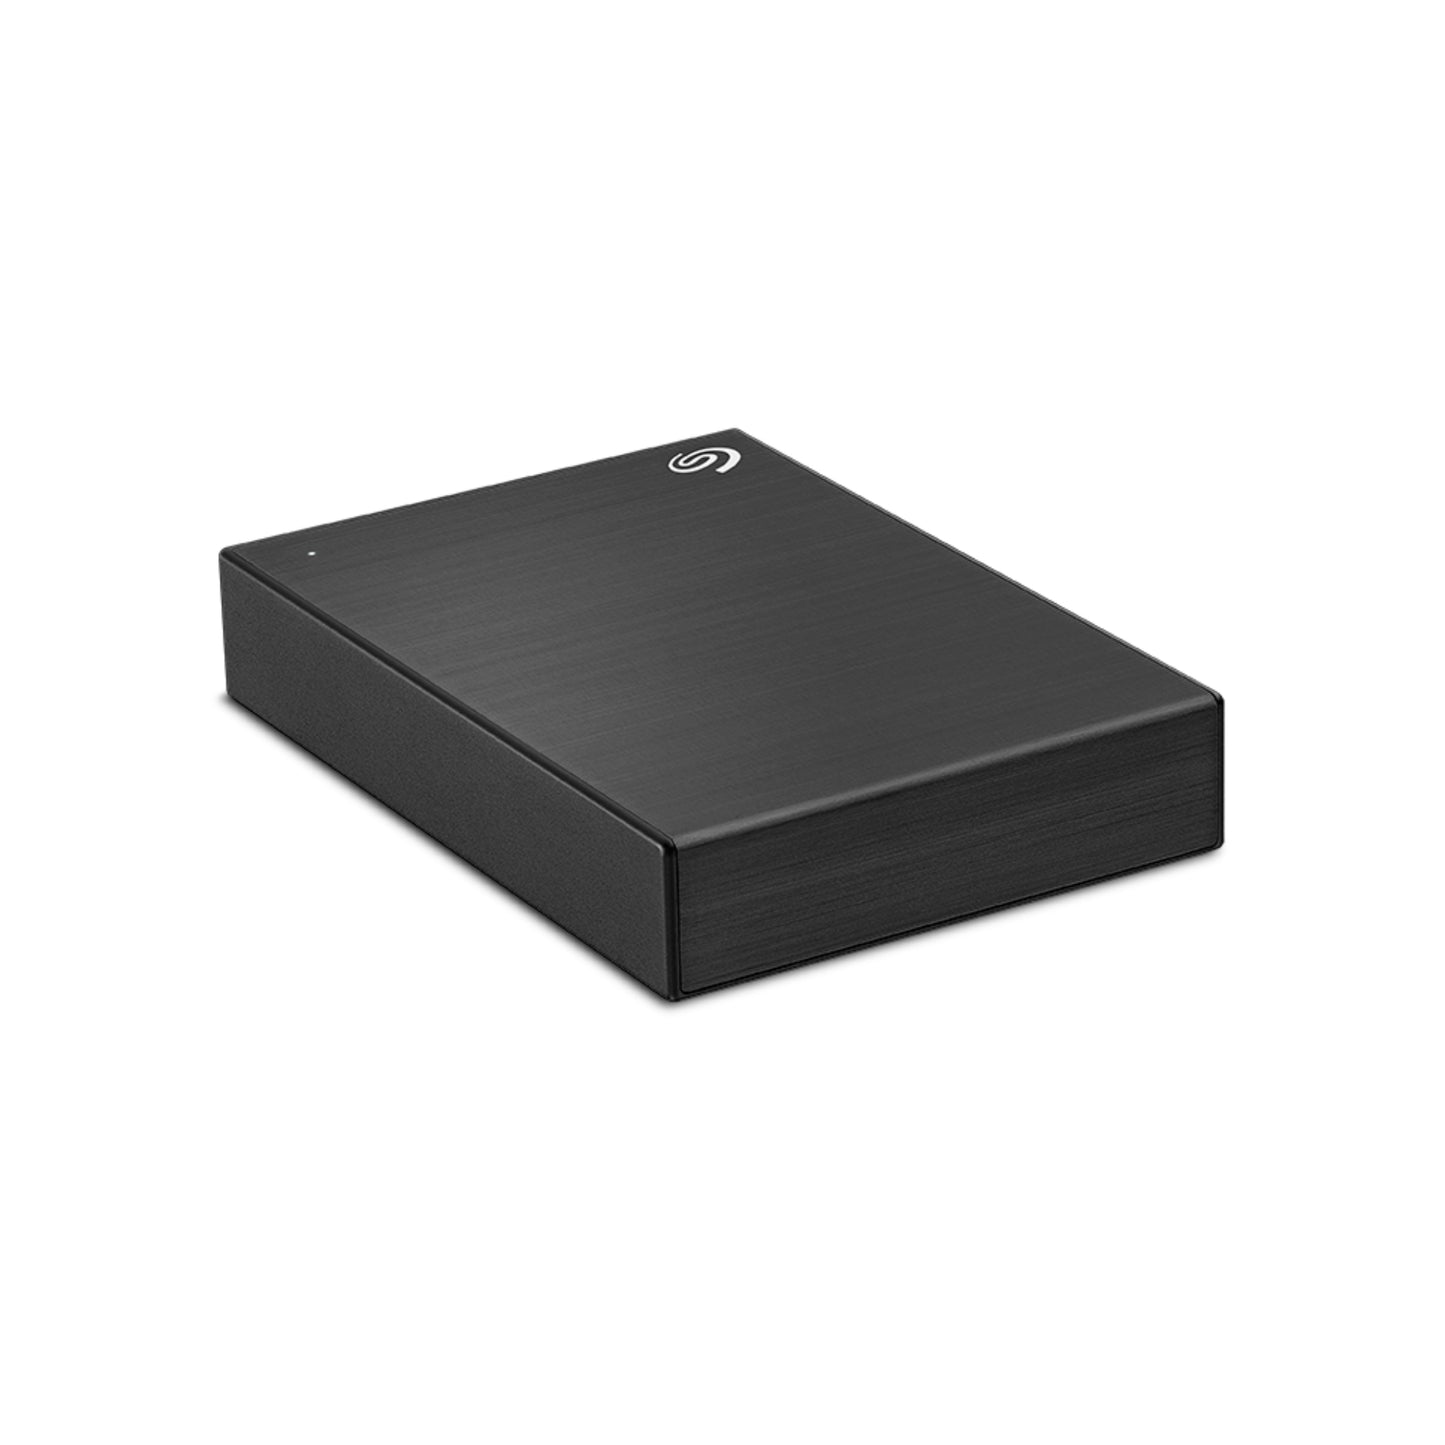 SEAGATE One Touch Slim USB 3.0 2TB - Black